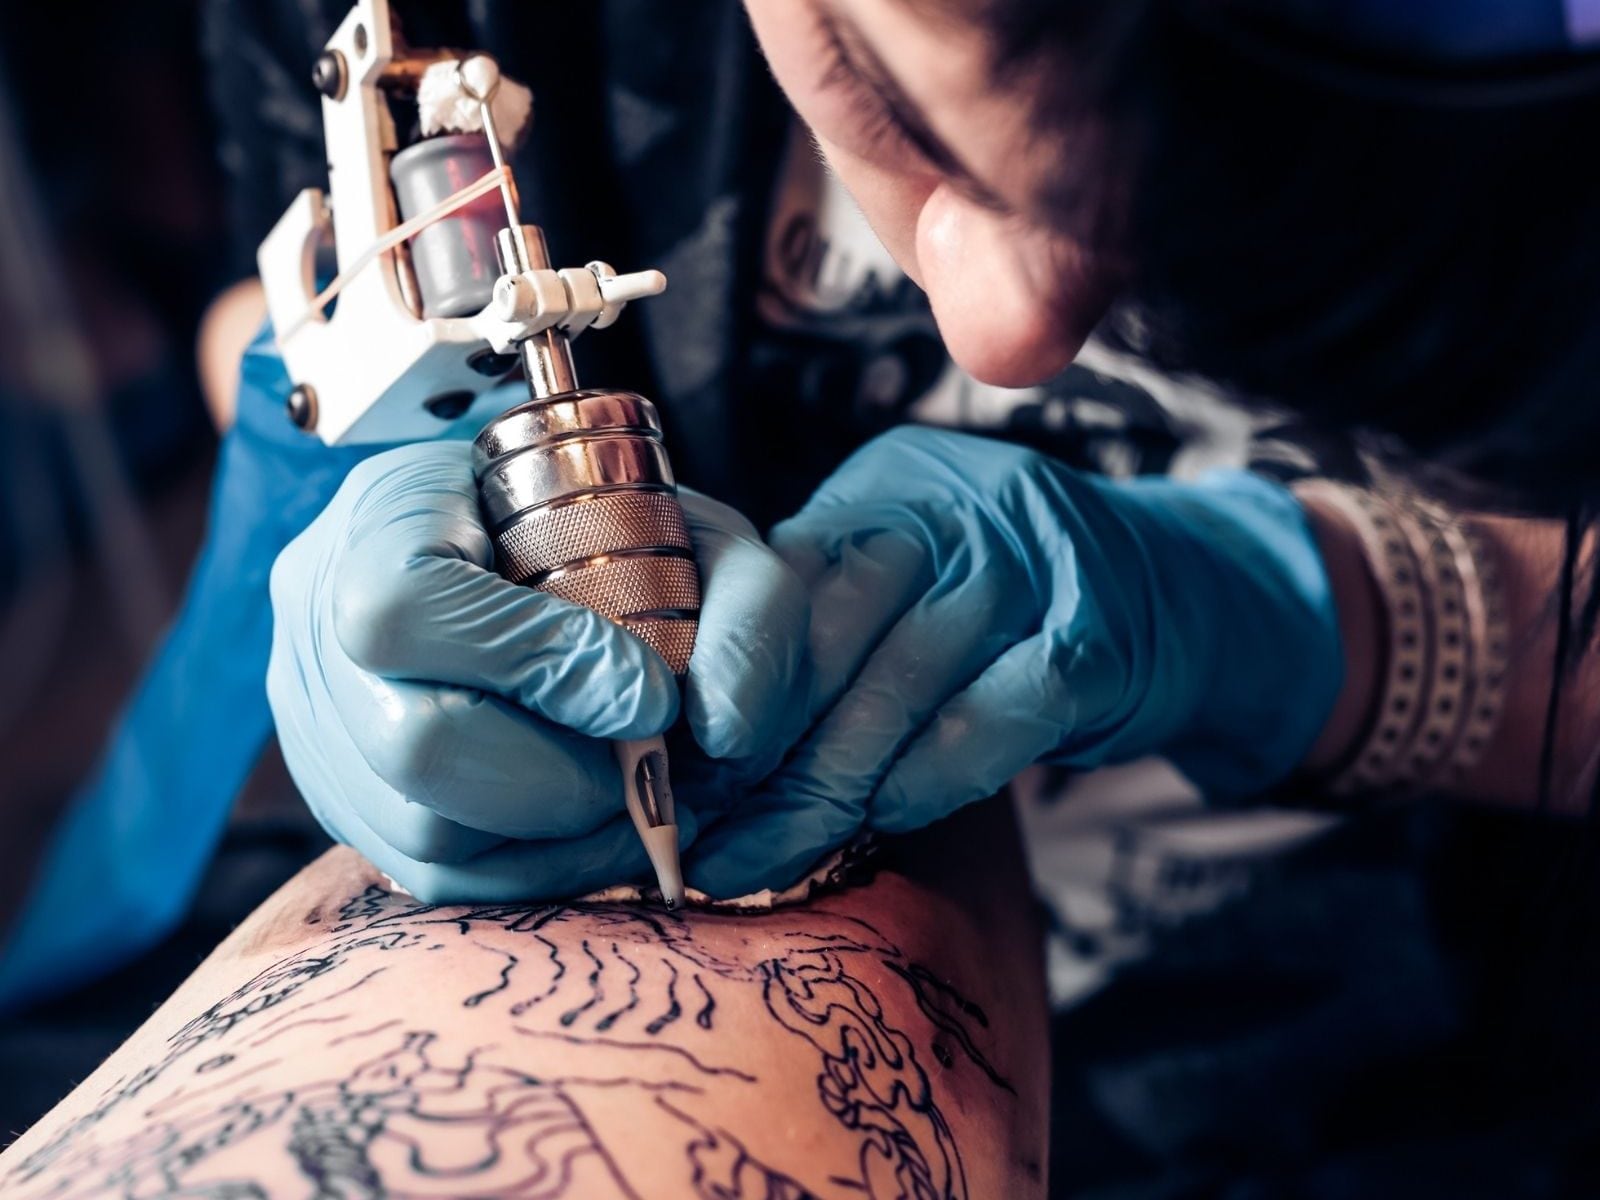 Ink-Fected Tattoo Studio - #tattoo #customtattoo #budhatattoo #tattoos  #tattooed #tattooarts #tattoolovers #tattoo #tattooartist #tattoostudio  #inkfectedtattoostudio #inkfected #inkfectedtattoo #kochitattooartist  #kochitattoo #kochitattoostudio ...